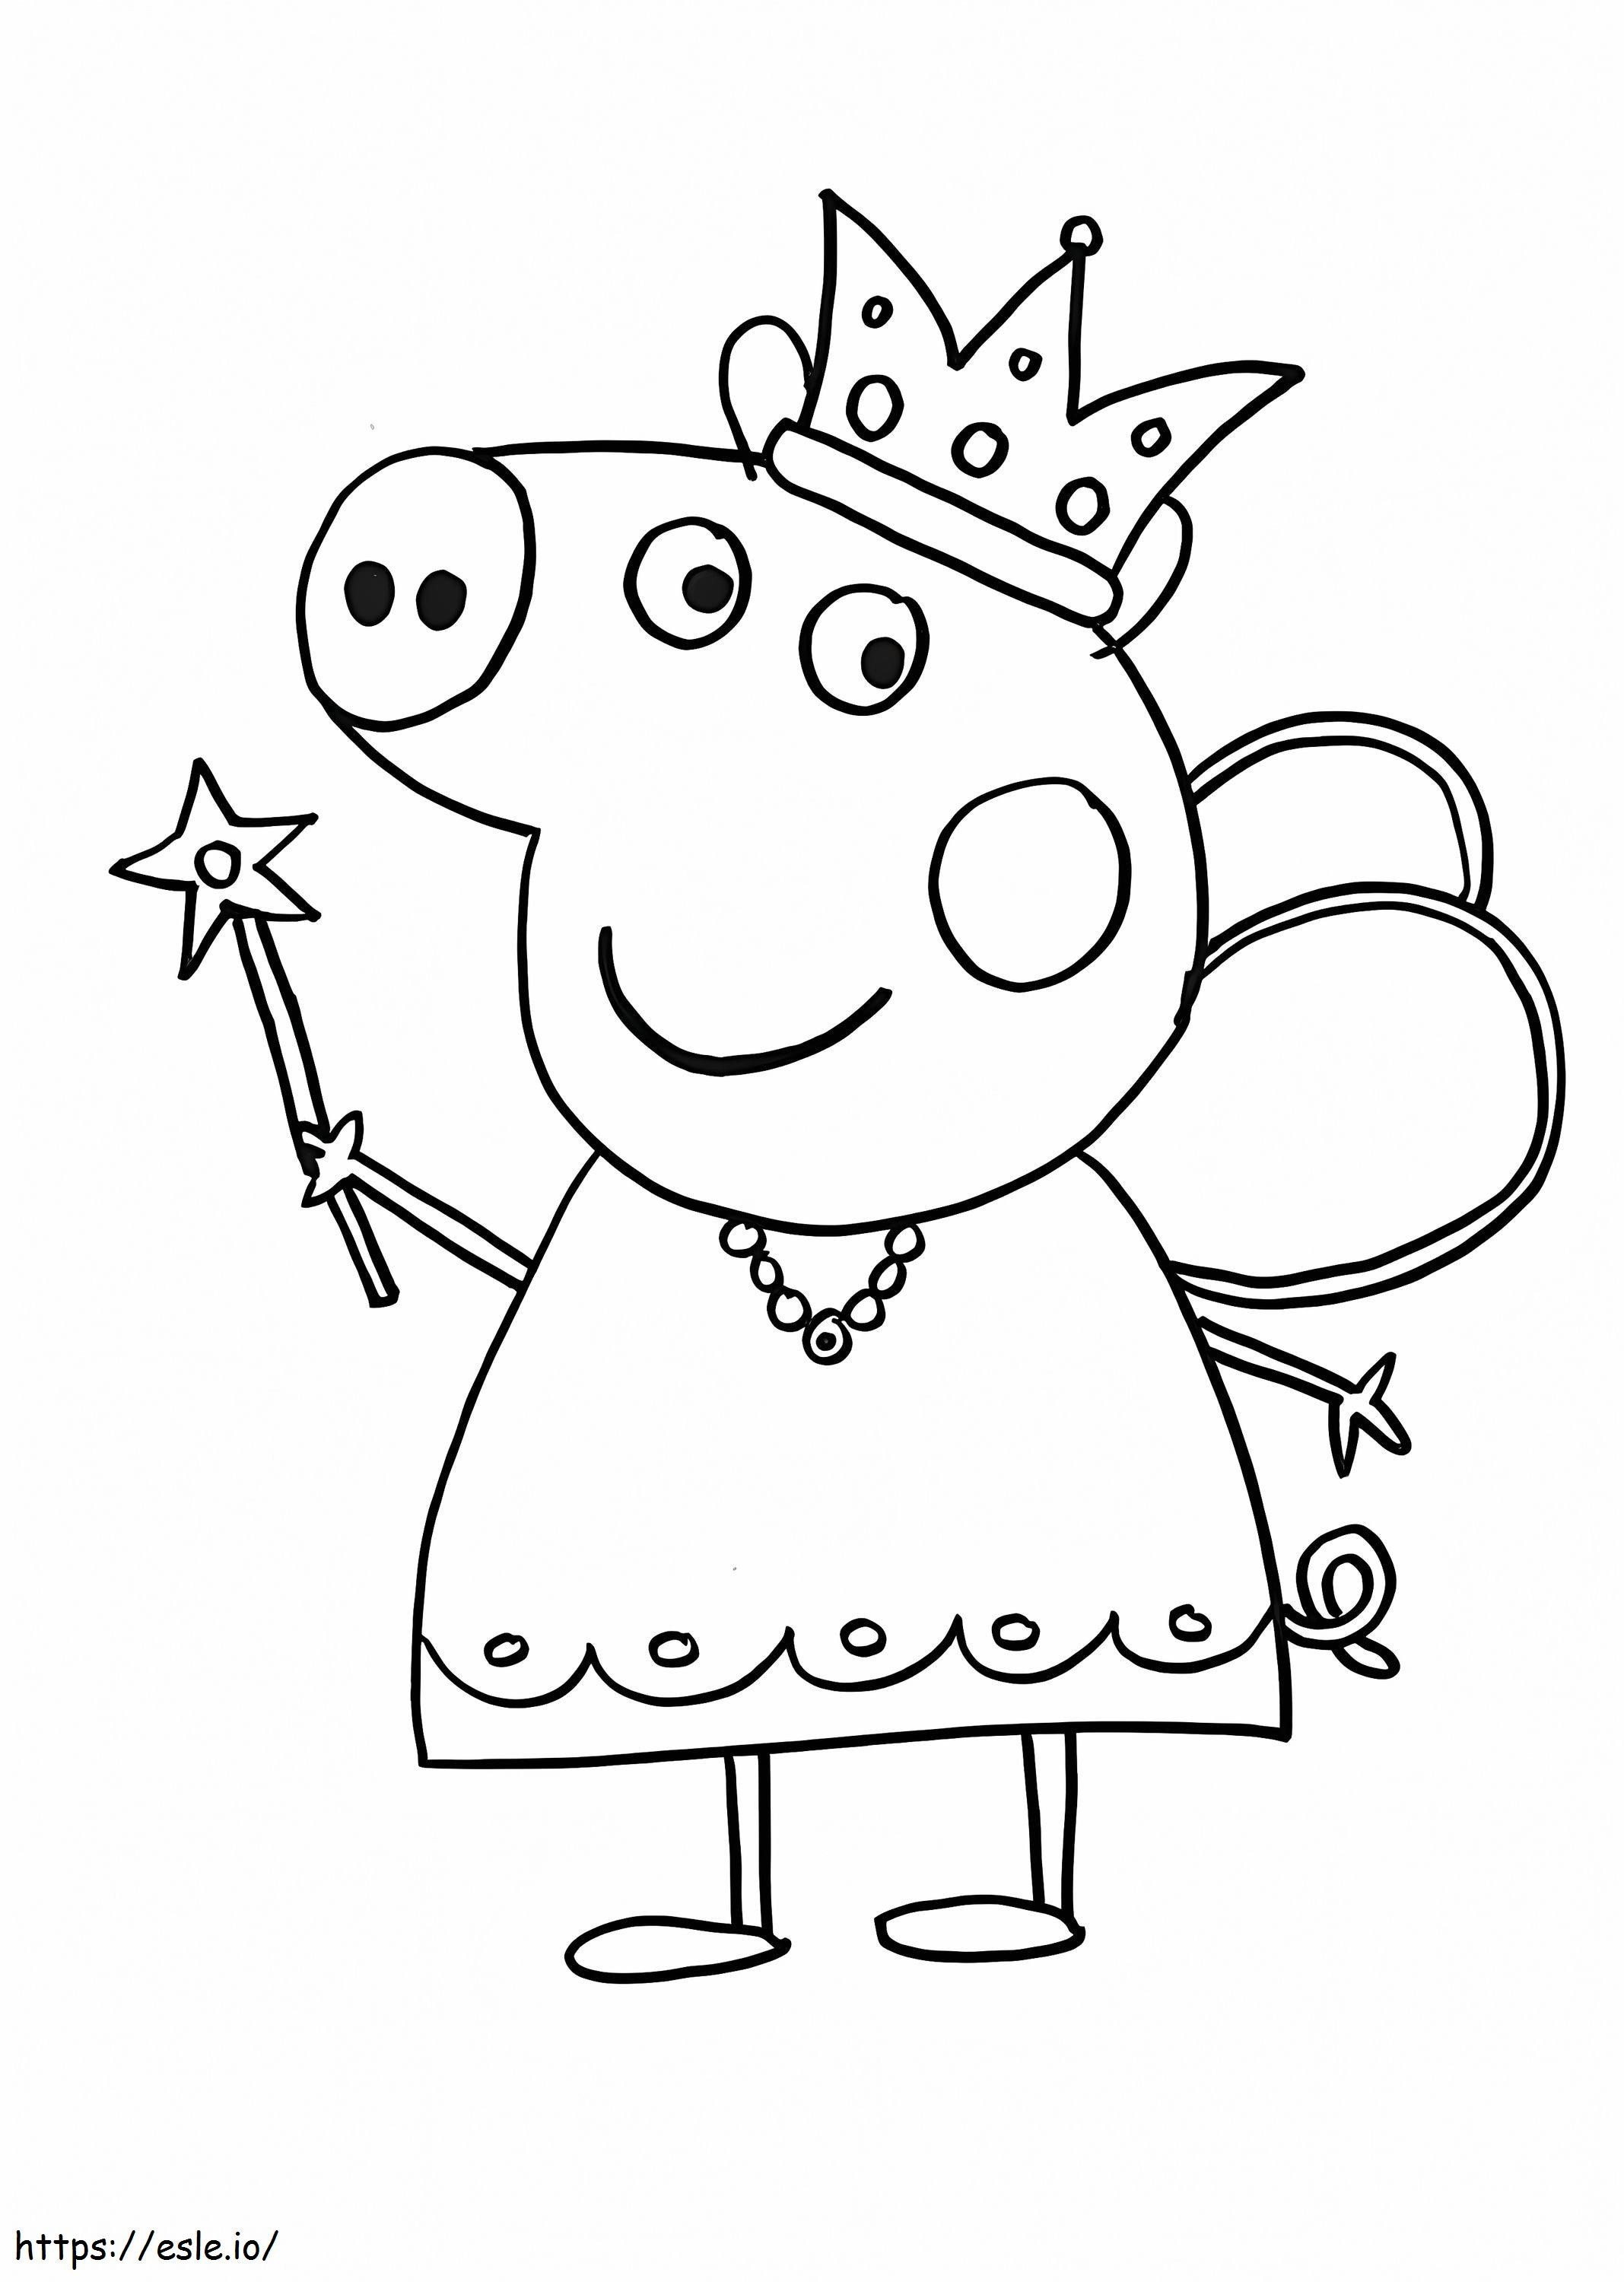 Prinzessin Peppa Pig ausmalbilder